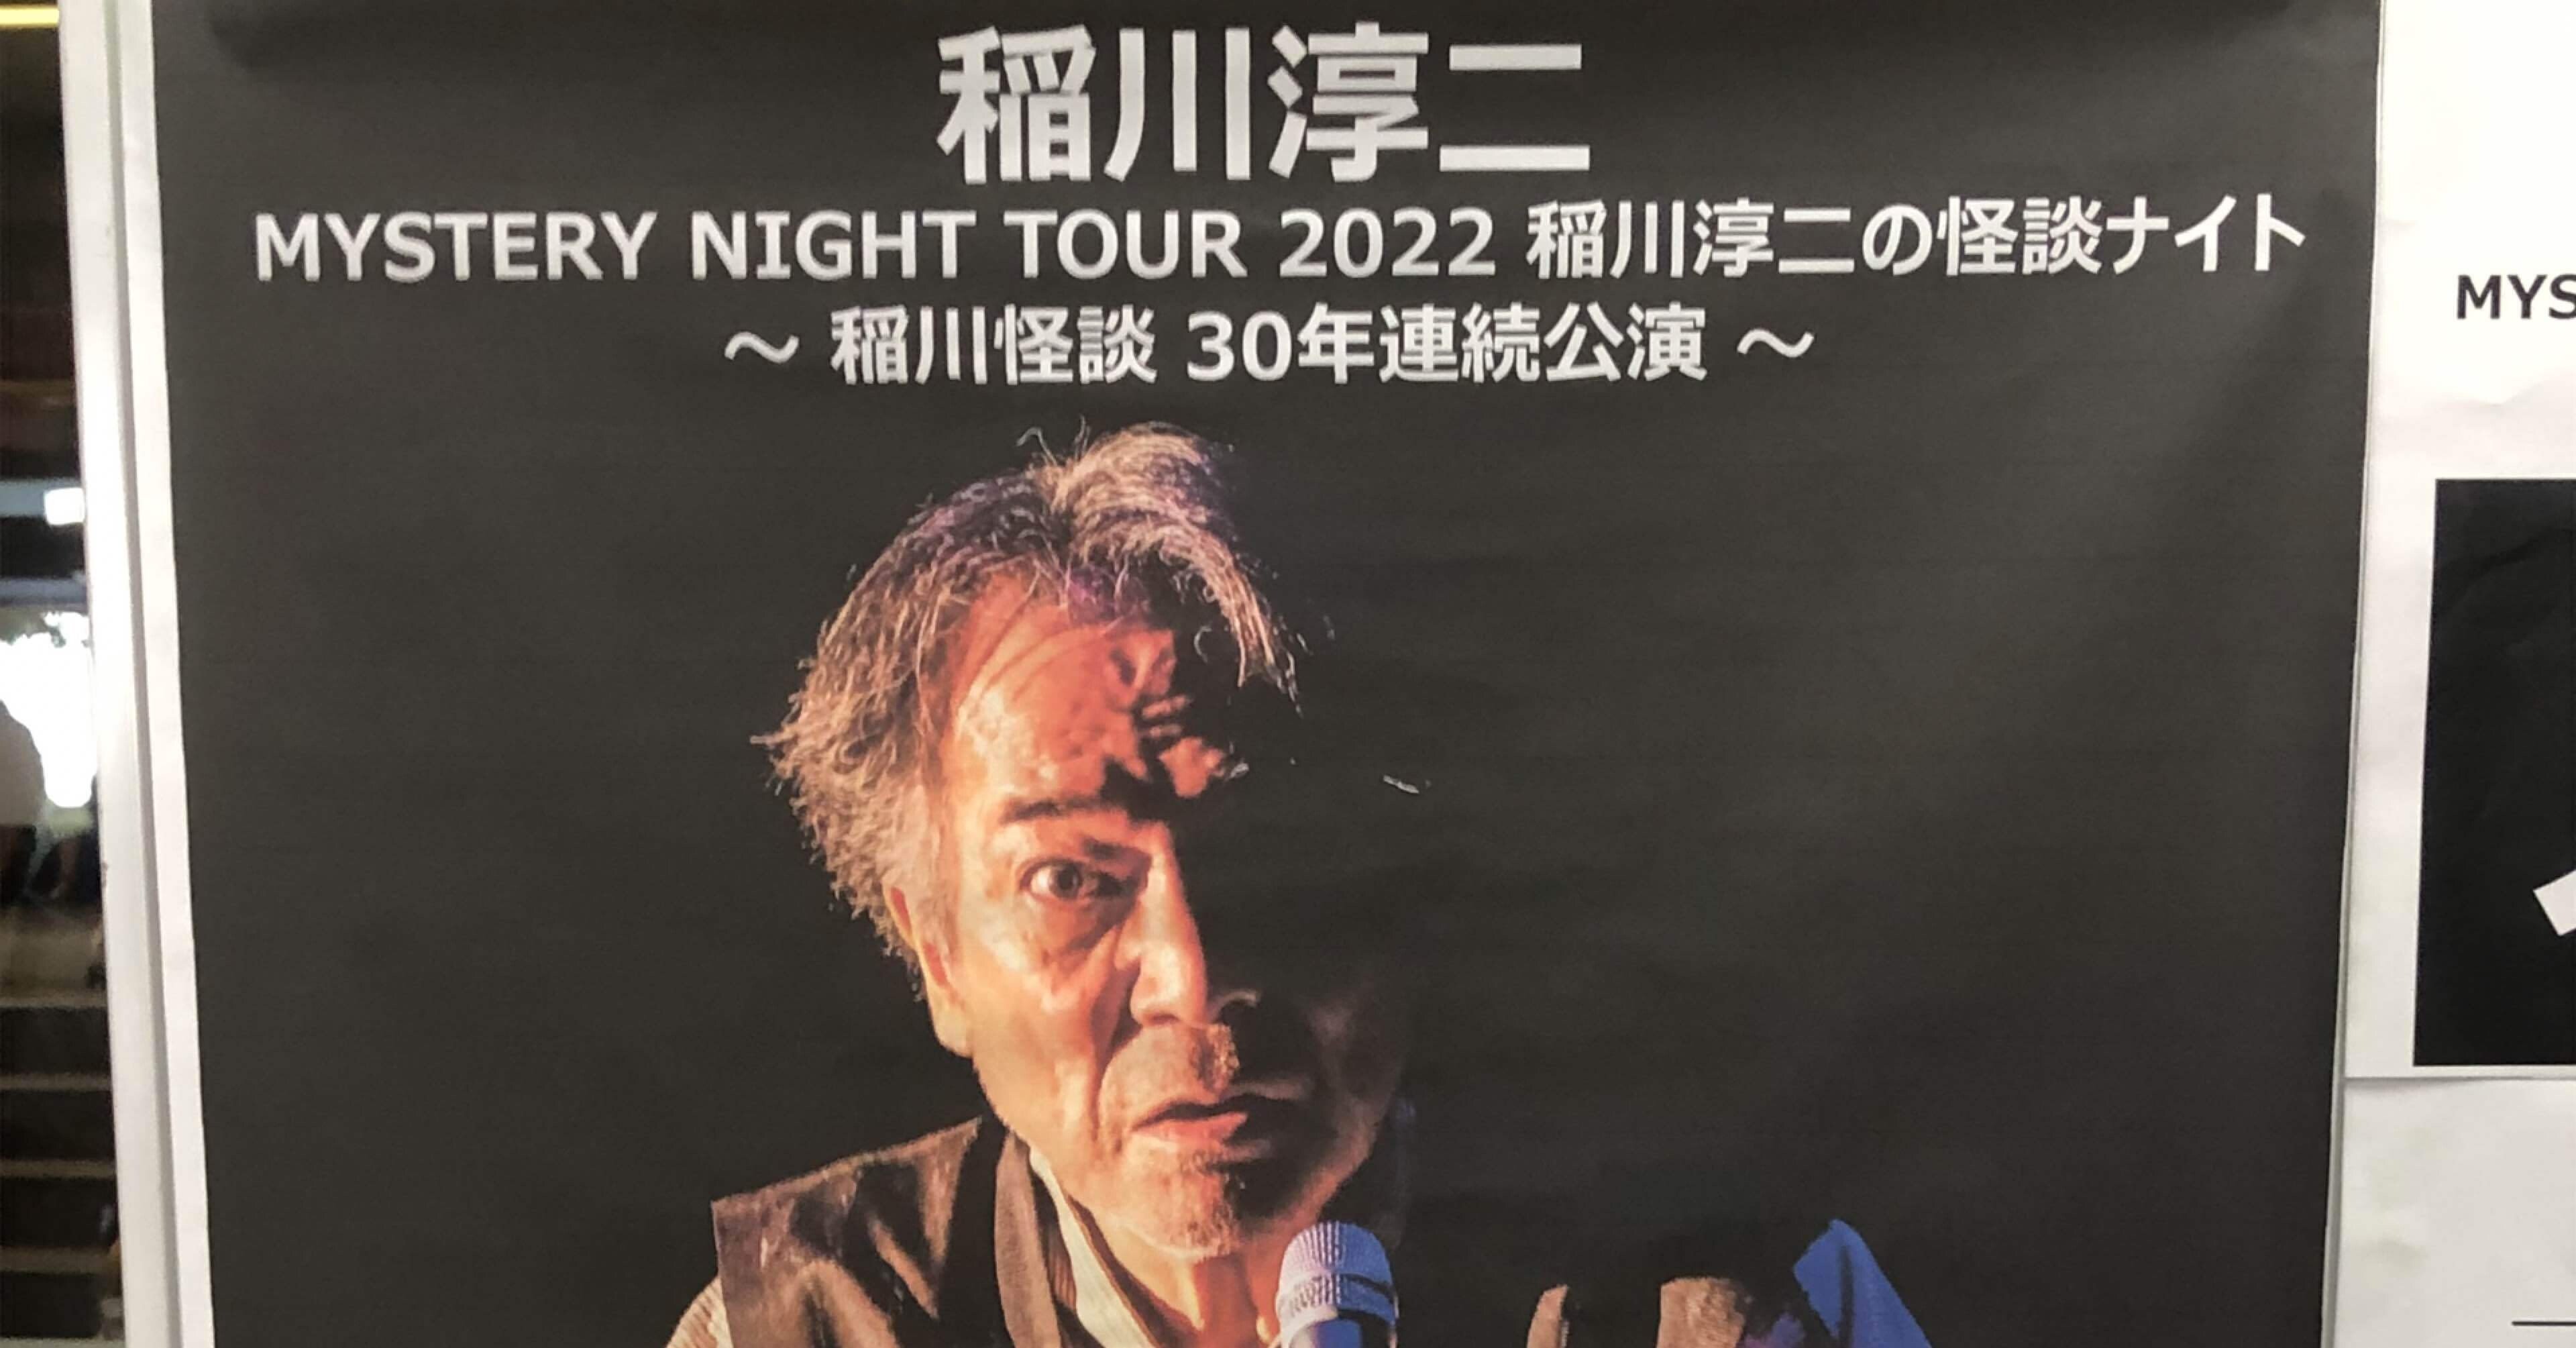 『MYSTERY NIGHT TOUR 2022 稲川淳二の怪談ナイト』観覧記録